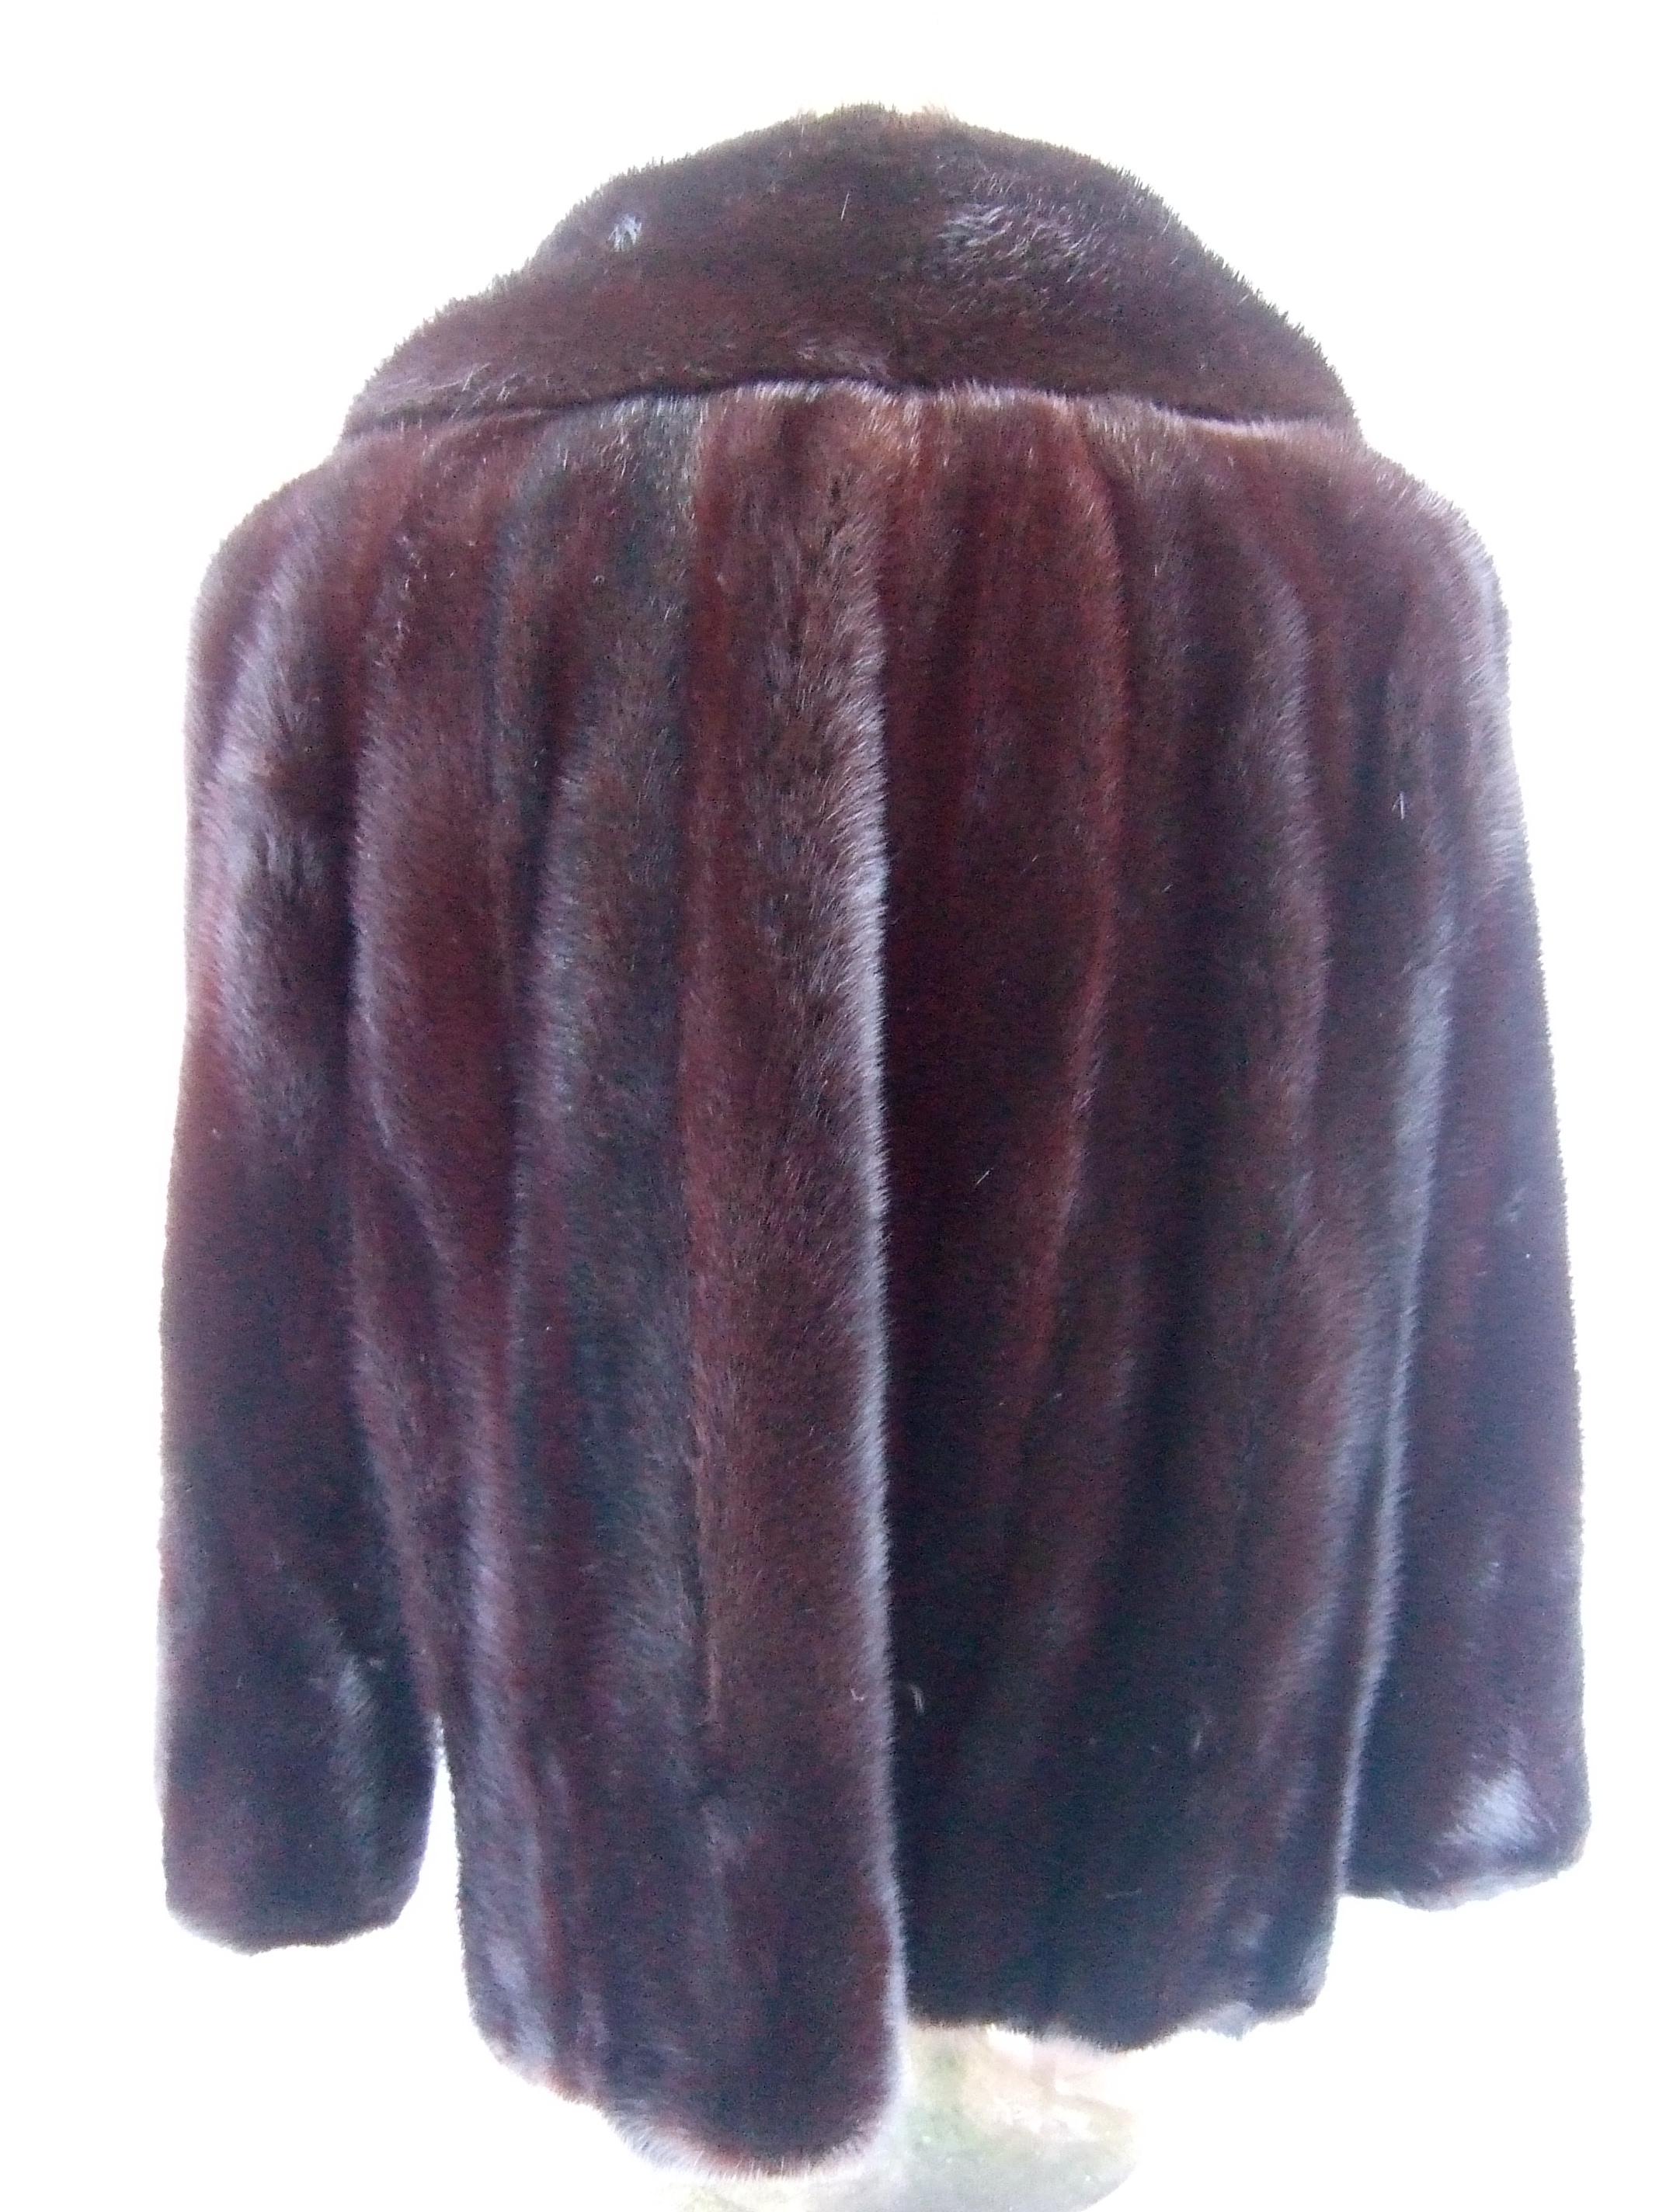 Luxurious Mahogany Plush Dark Brown Mink Fur Jacket by Bill Marre' c 1970s  9